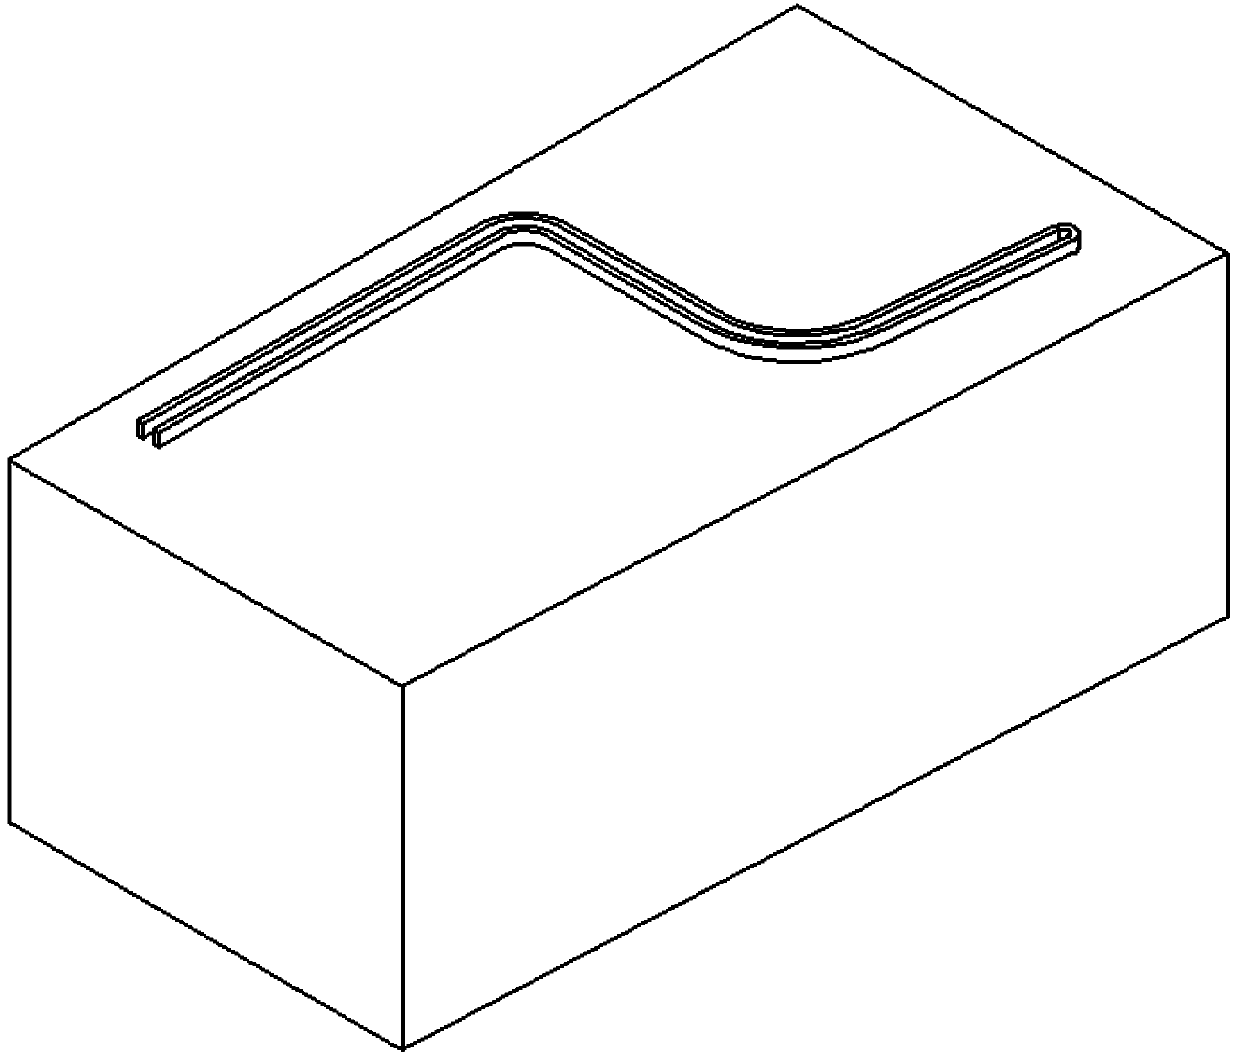 A Concrete Dam Distributed Temperature Measuring Optical Fiber Twin-strand "Z-shaped" Concrete Buried Construction Method